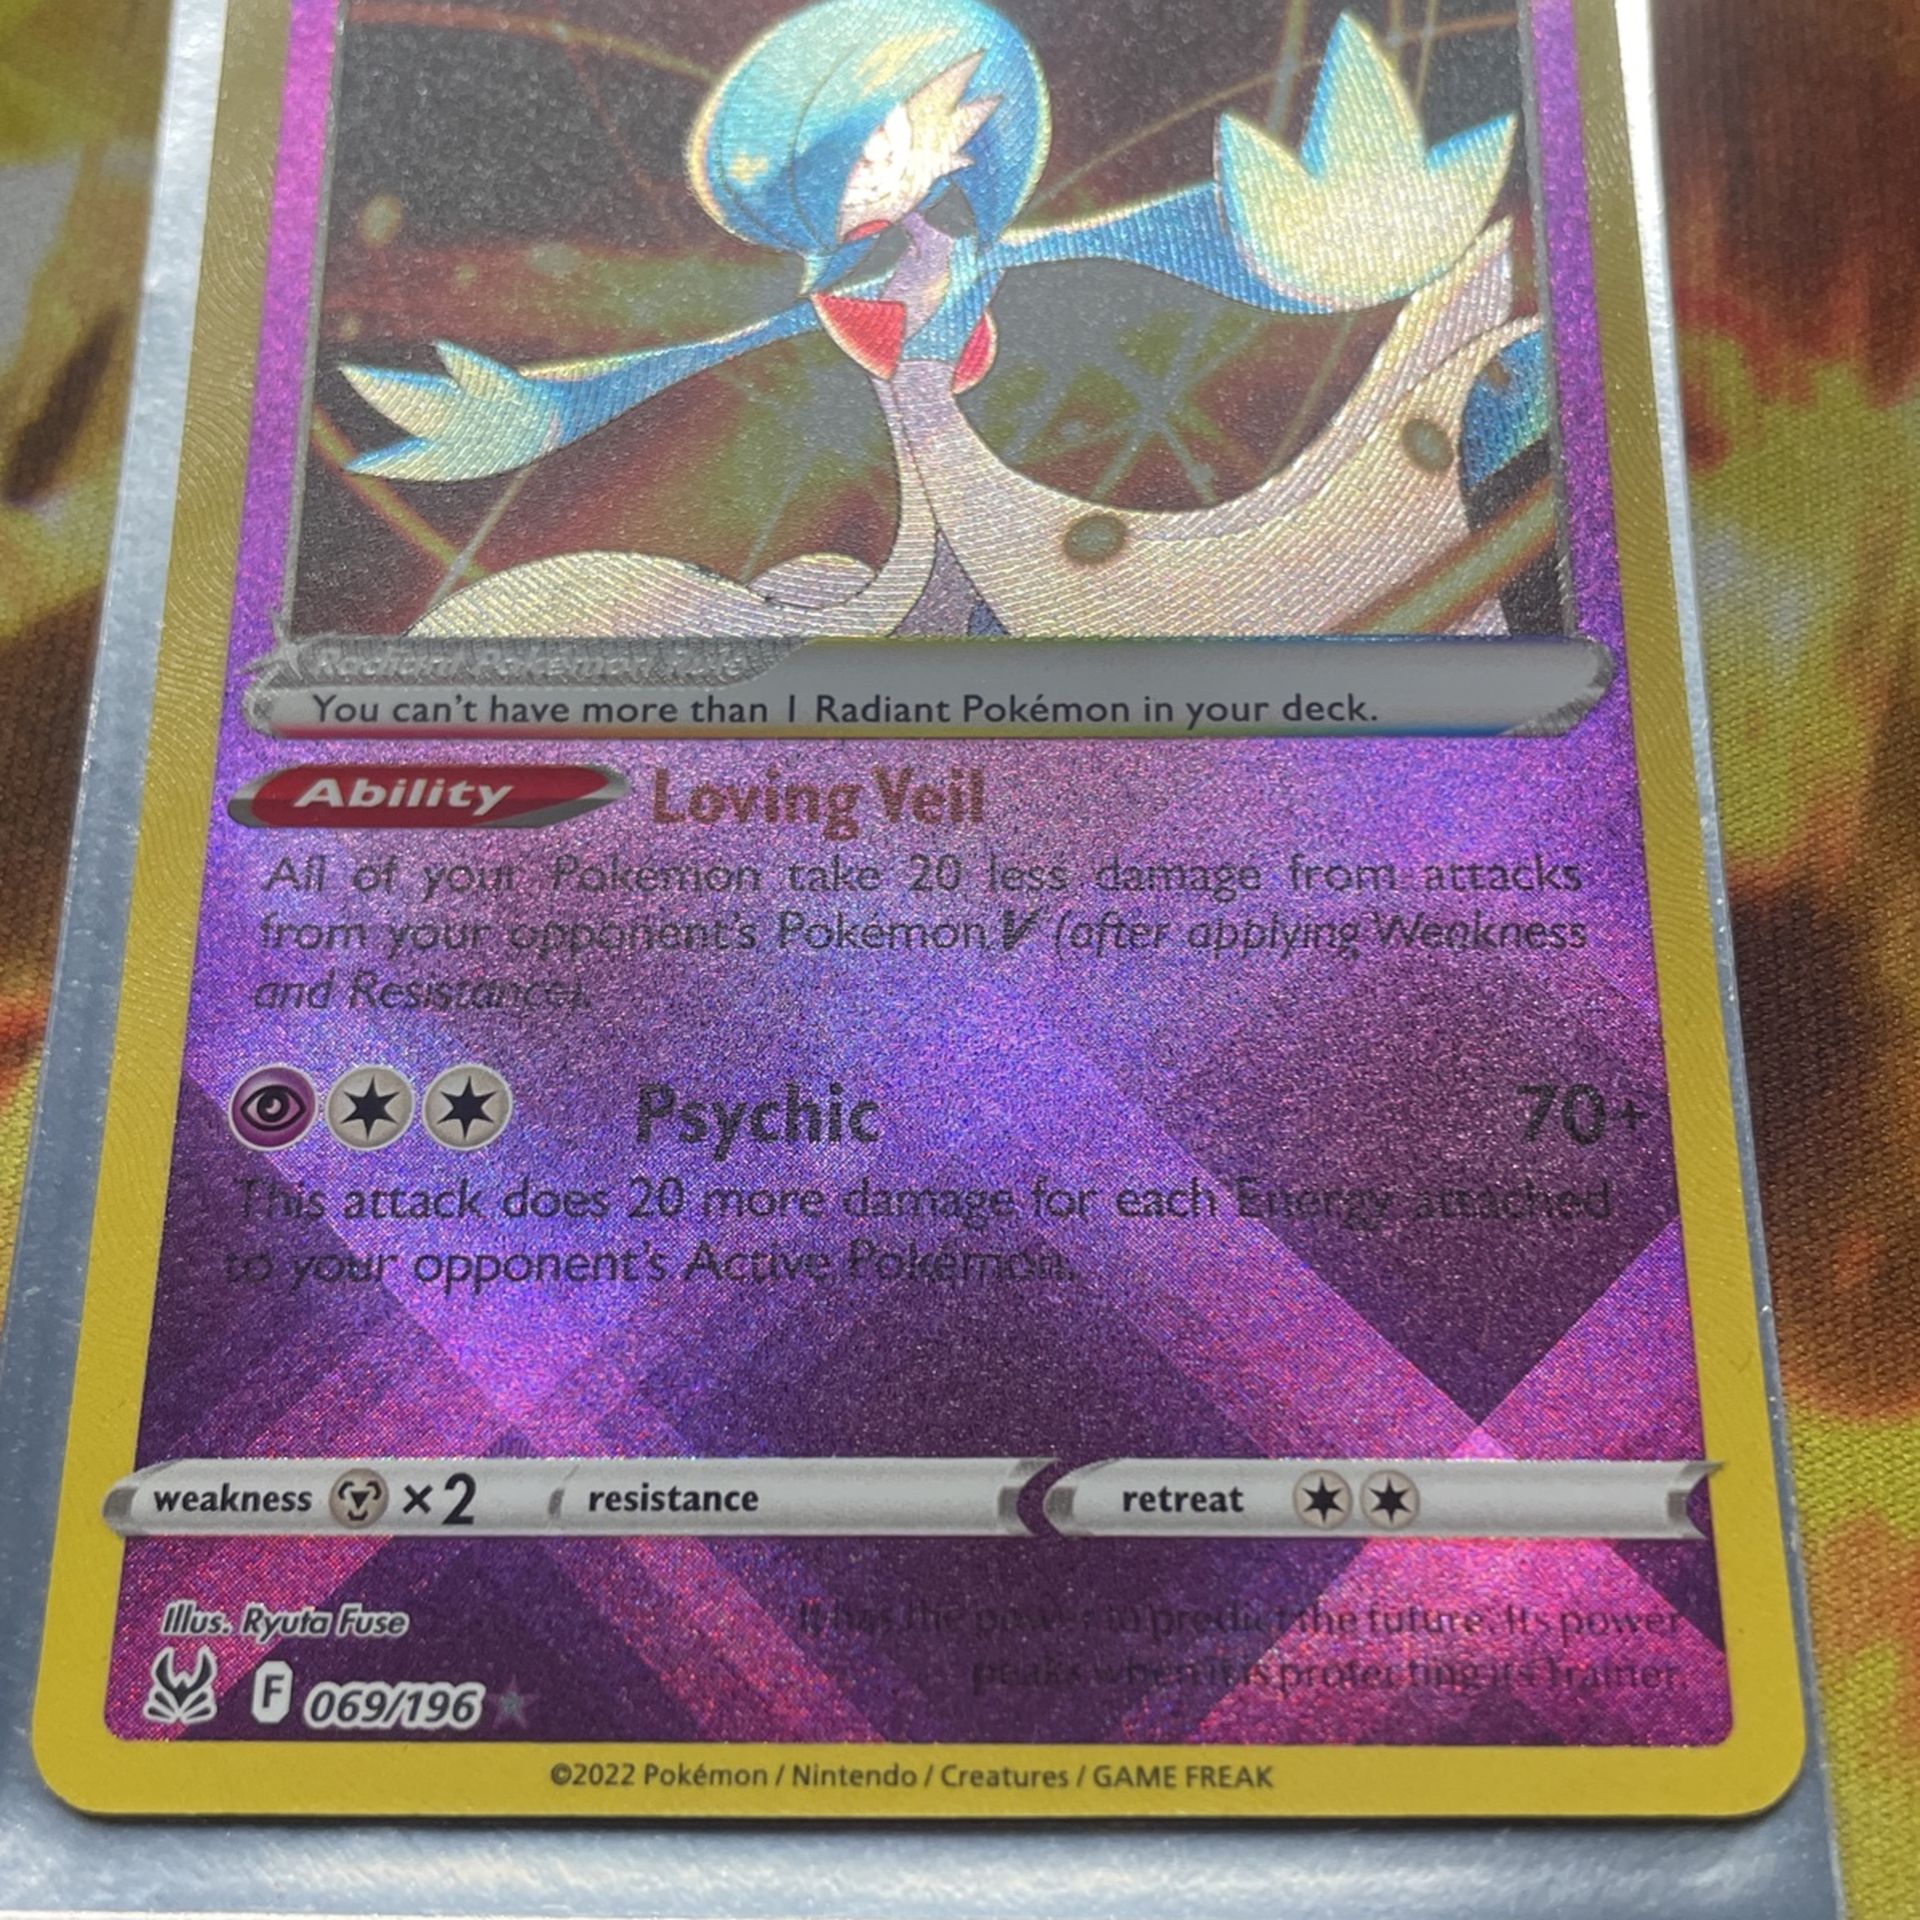 Pokémon Card Graded PSA 10 Shiny Gardevoir for Sale in Lynwood, CA - OfferUp